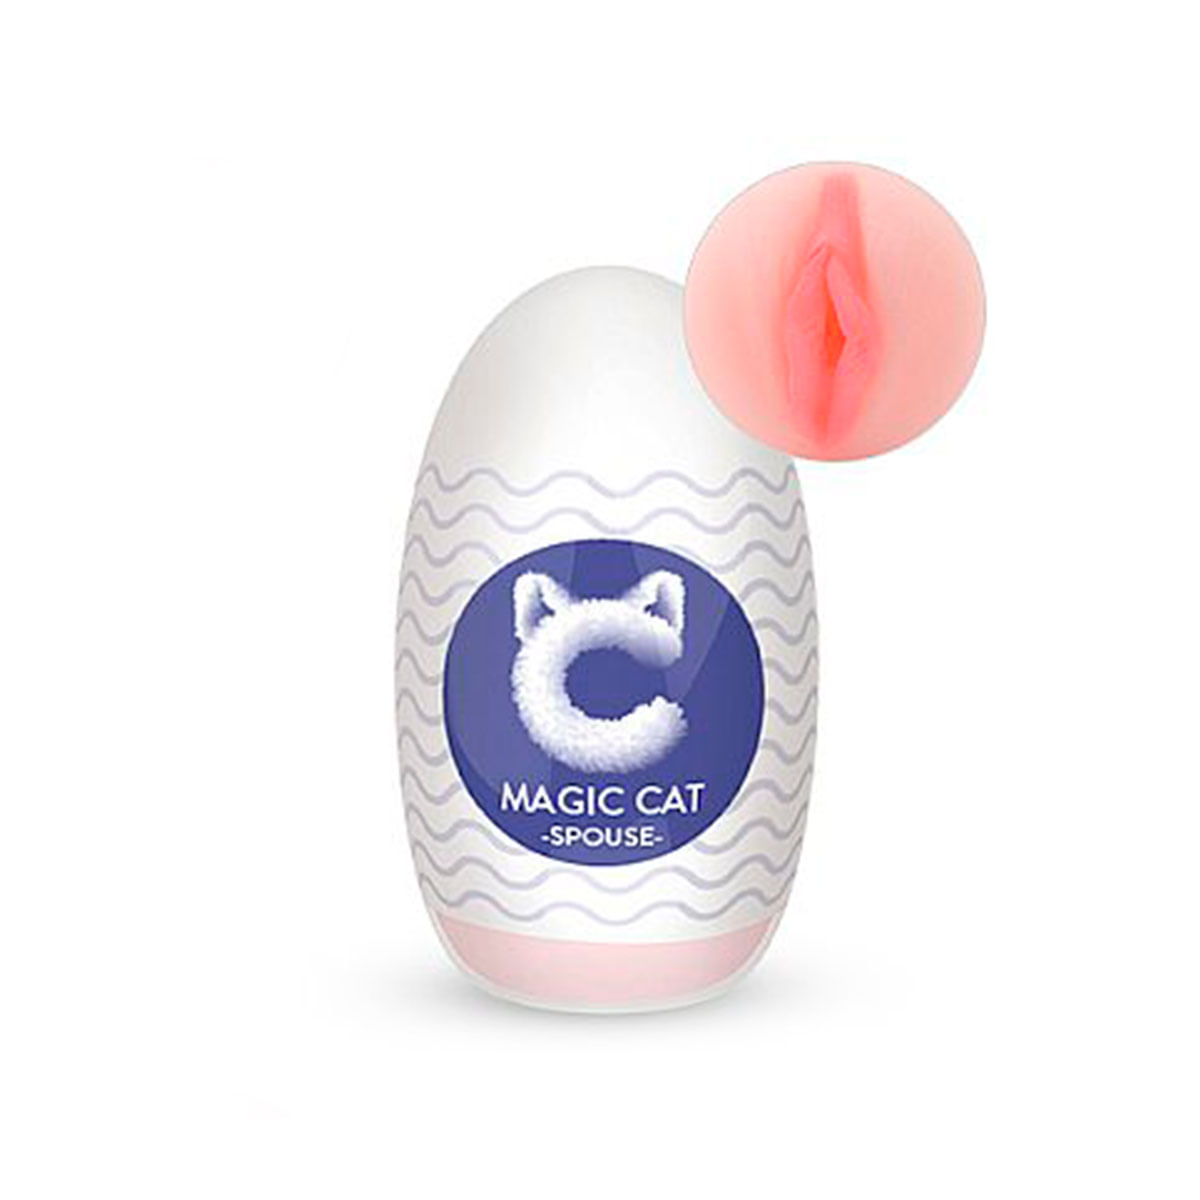 Magic Cat Spouse Egg em CyberSkin Formato Vagina Sexy Import